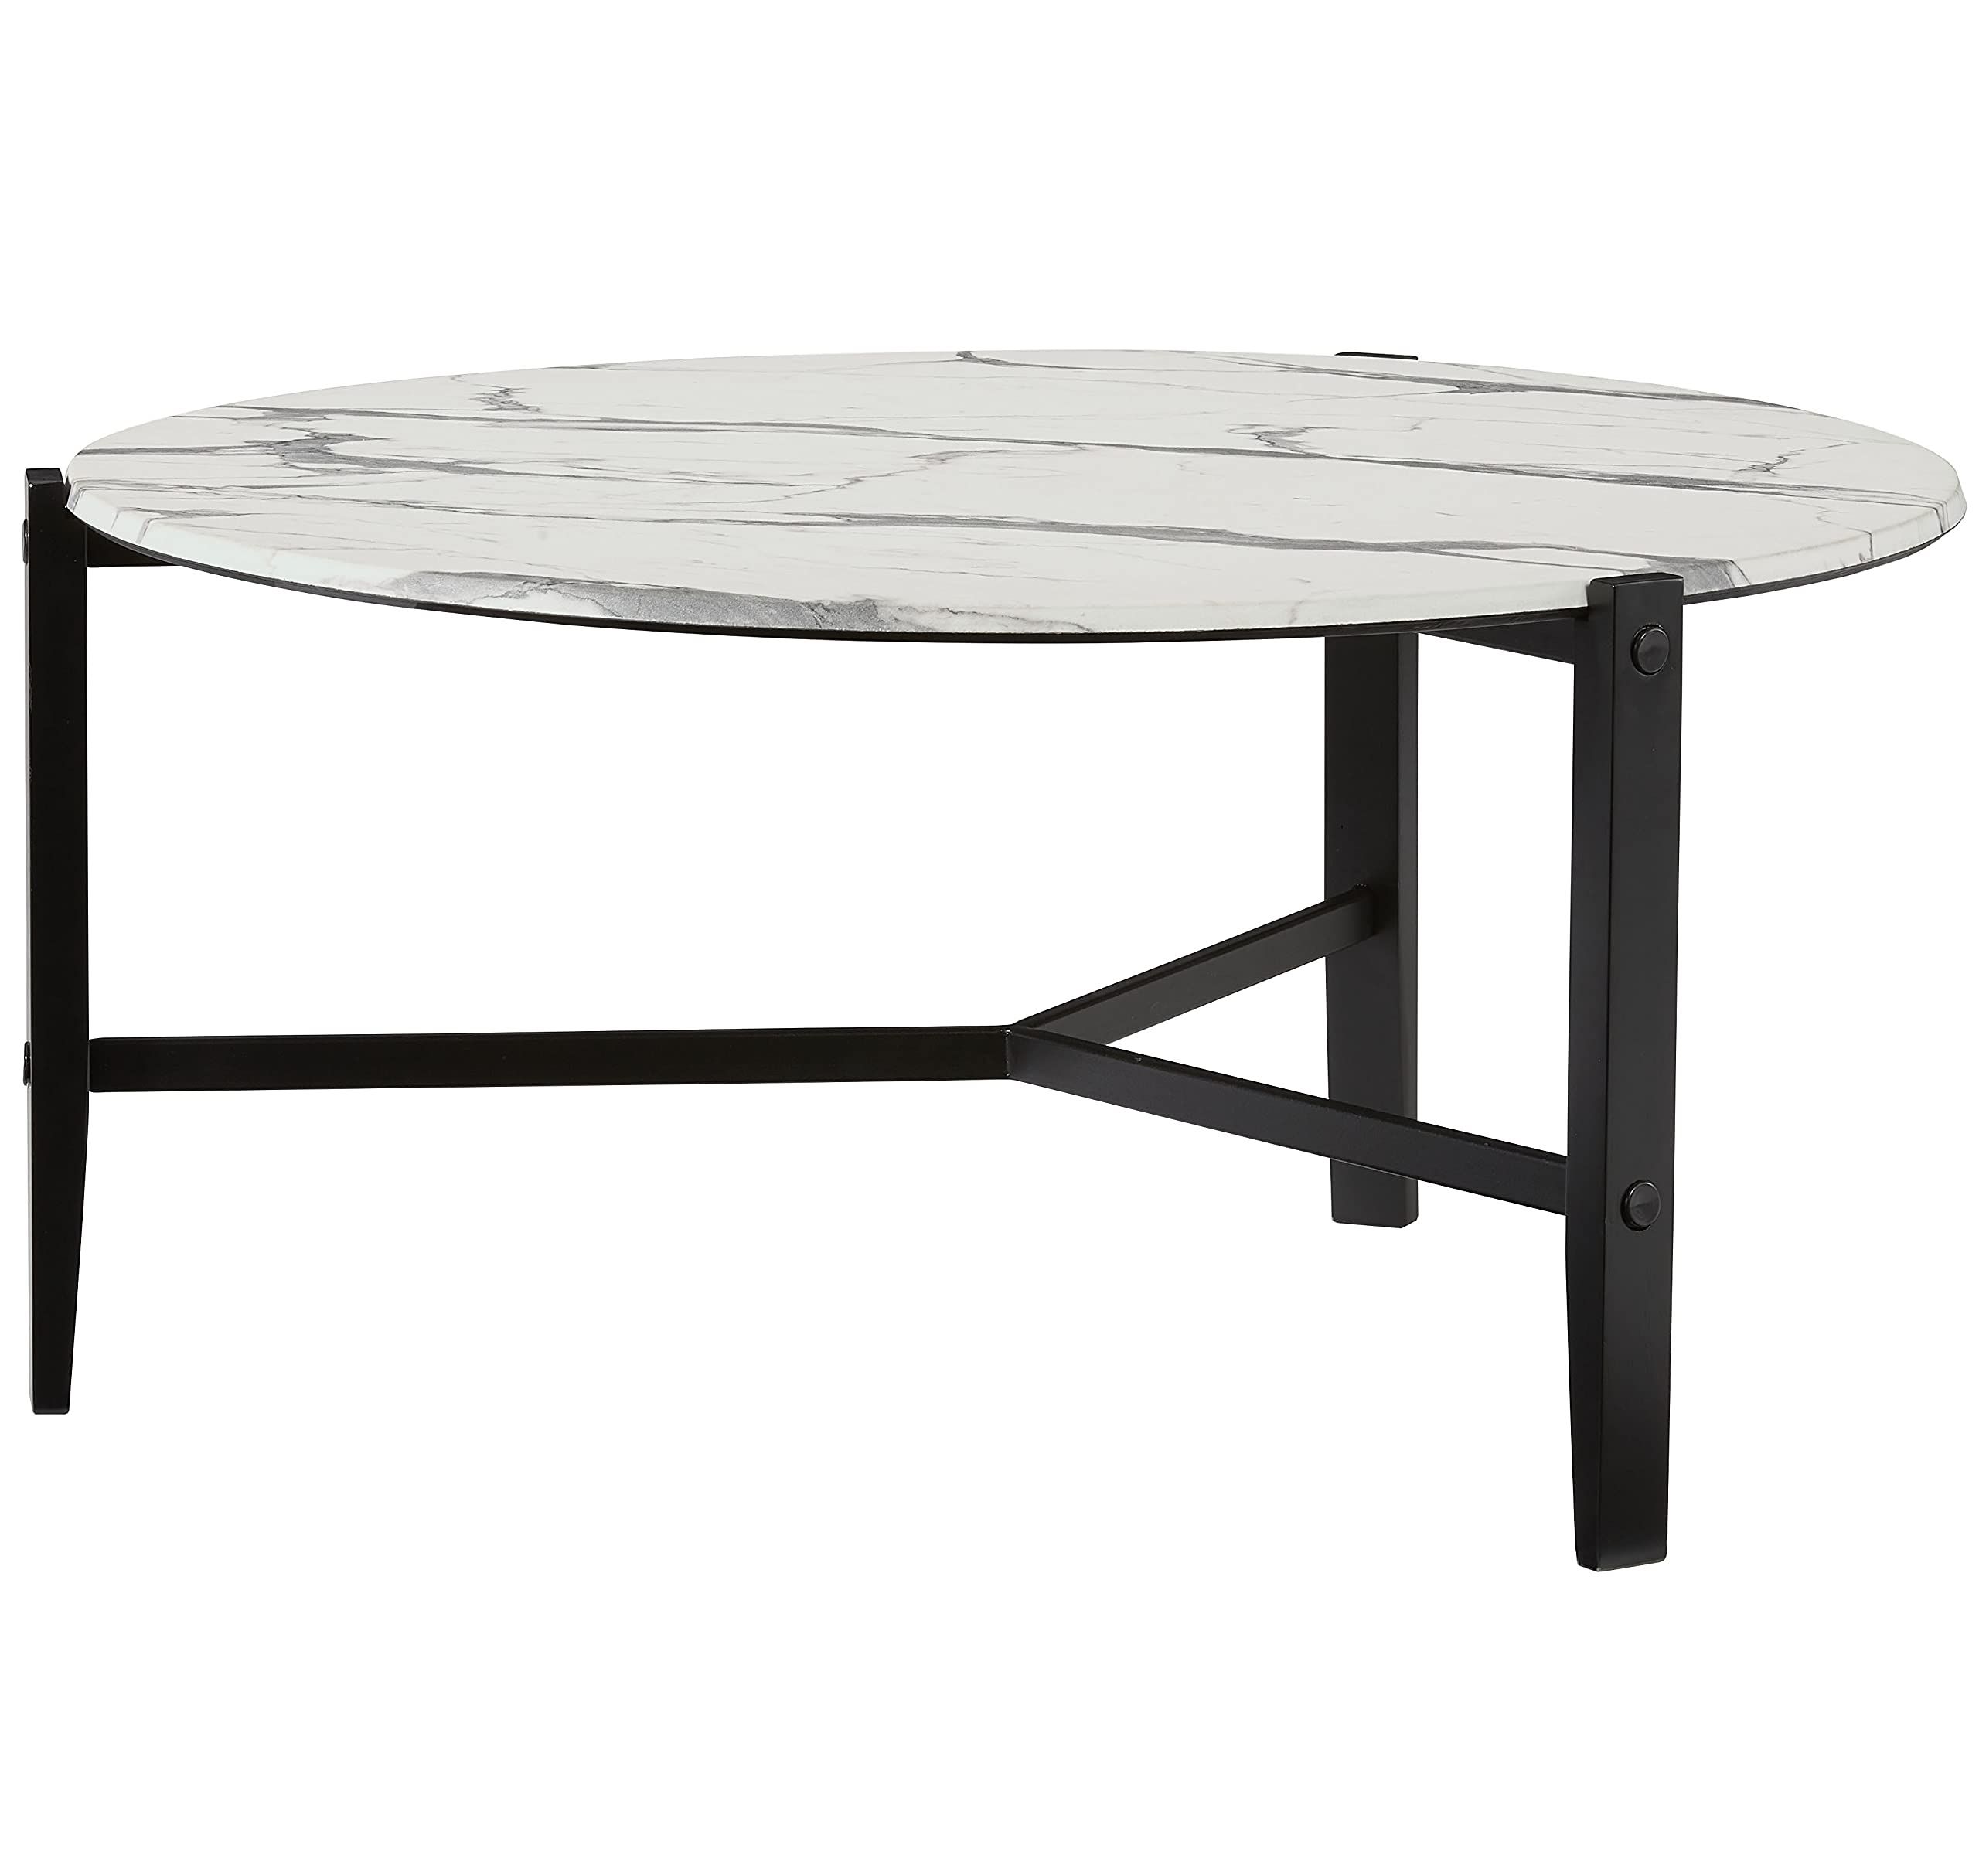 Progressive Furniture Cocktail Tables Pertaining To 2020 Amazon: Progressive Furniture Rowen Cocktail Table, Black : Home &  Kitchen (Photo 4 of 10)